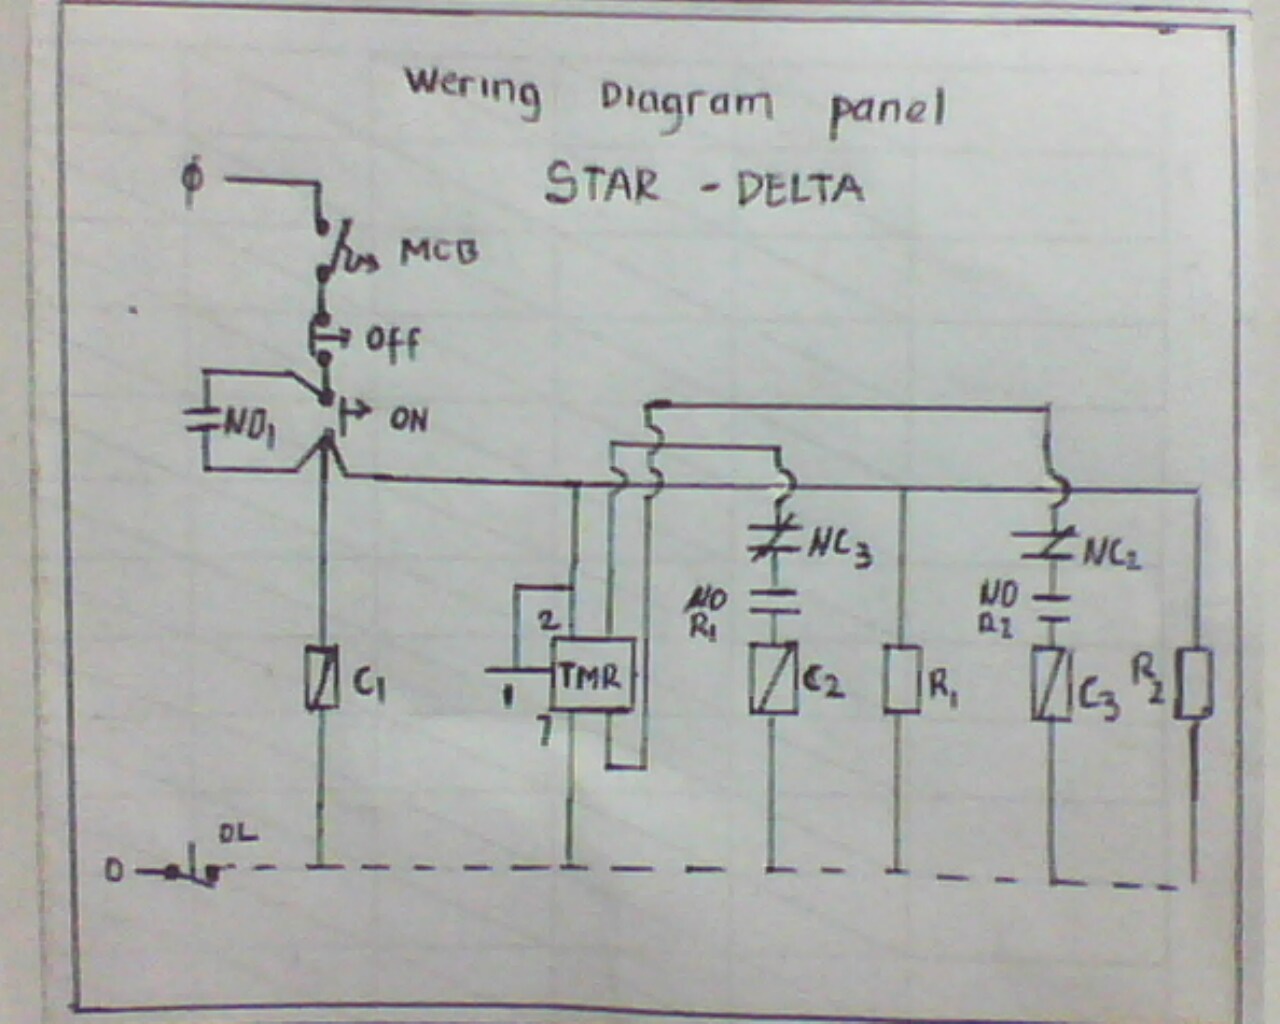 Installation of electrical panels instalasi panel listrik: Star  Delta